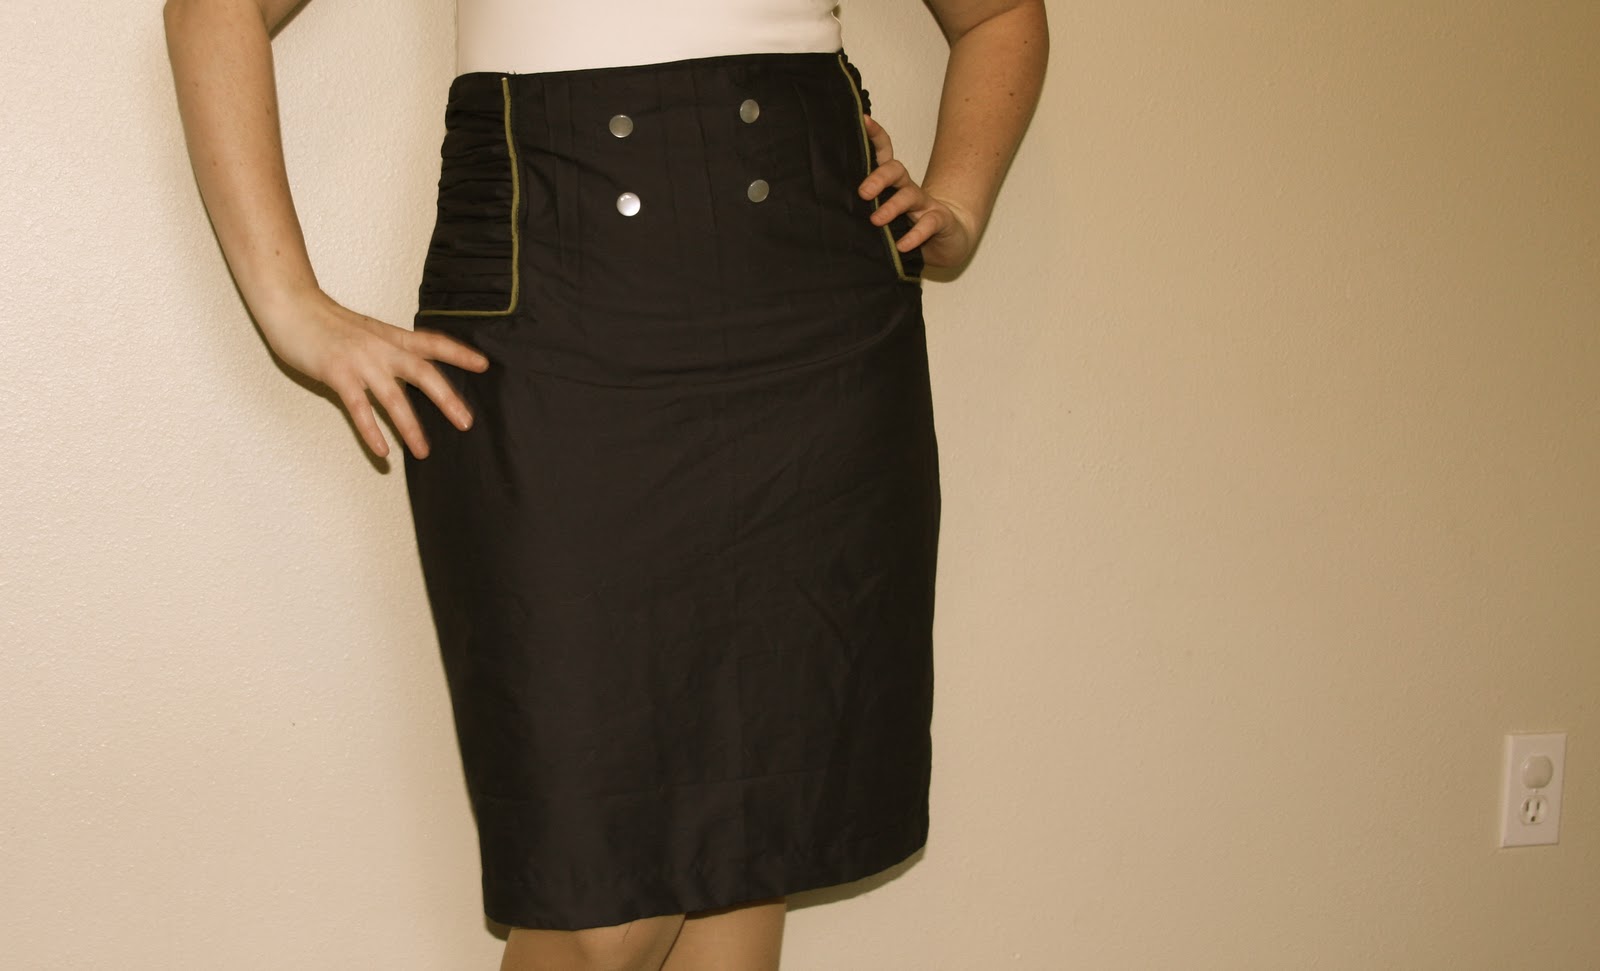 Pencil Skirt Tutorial 55